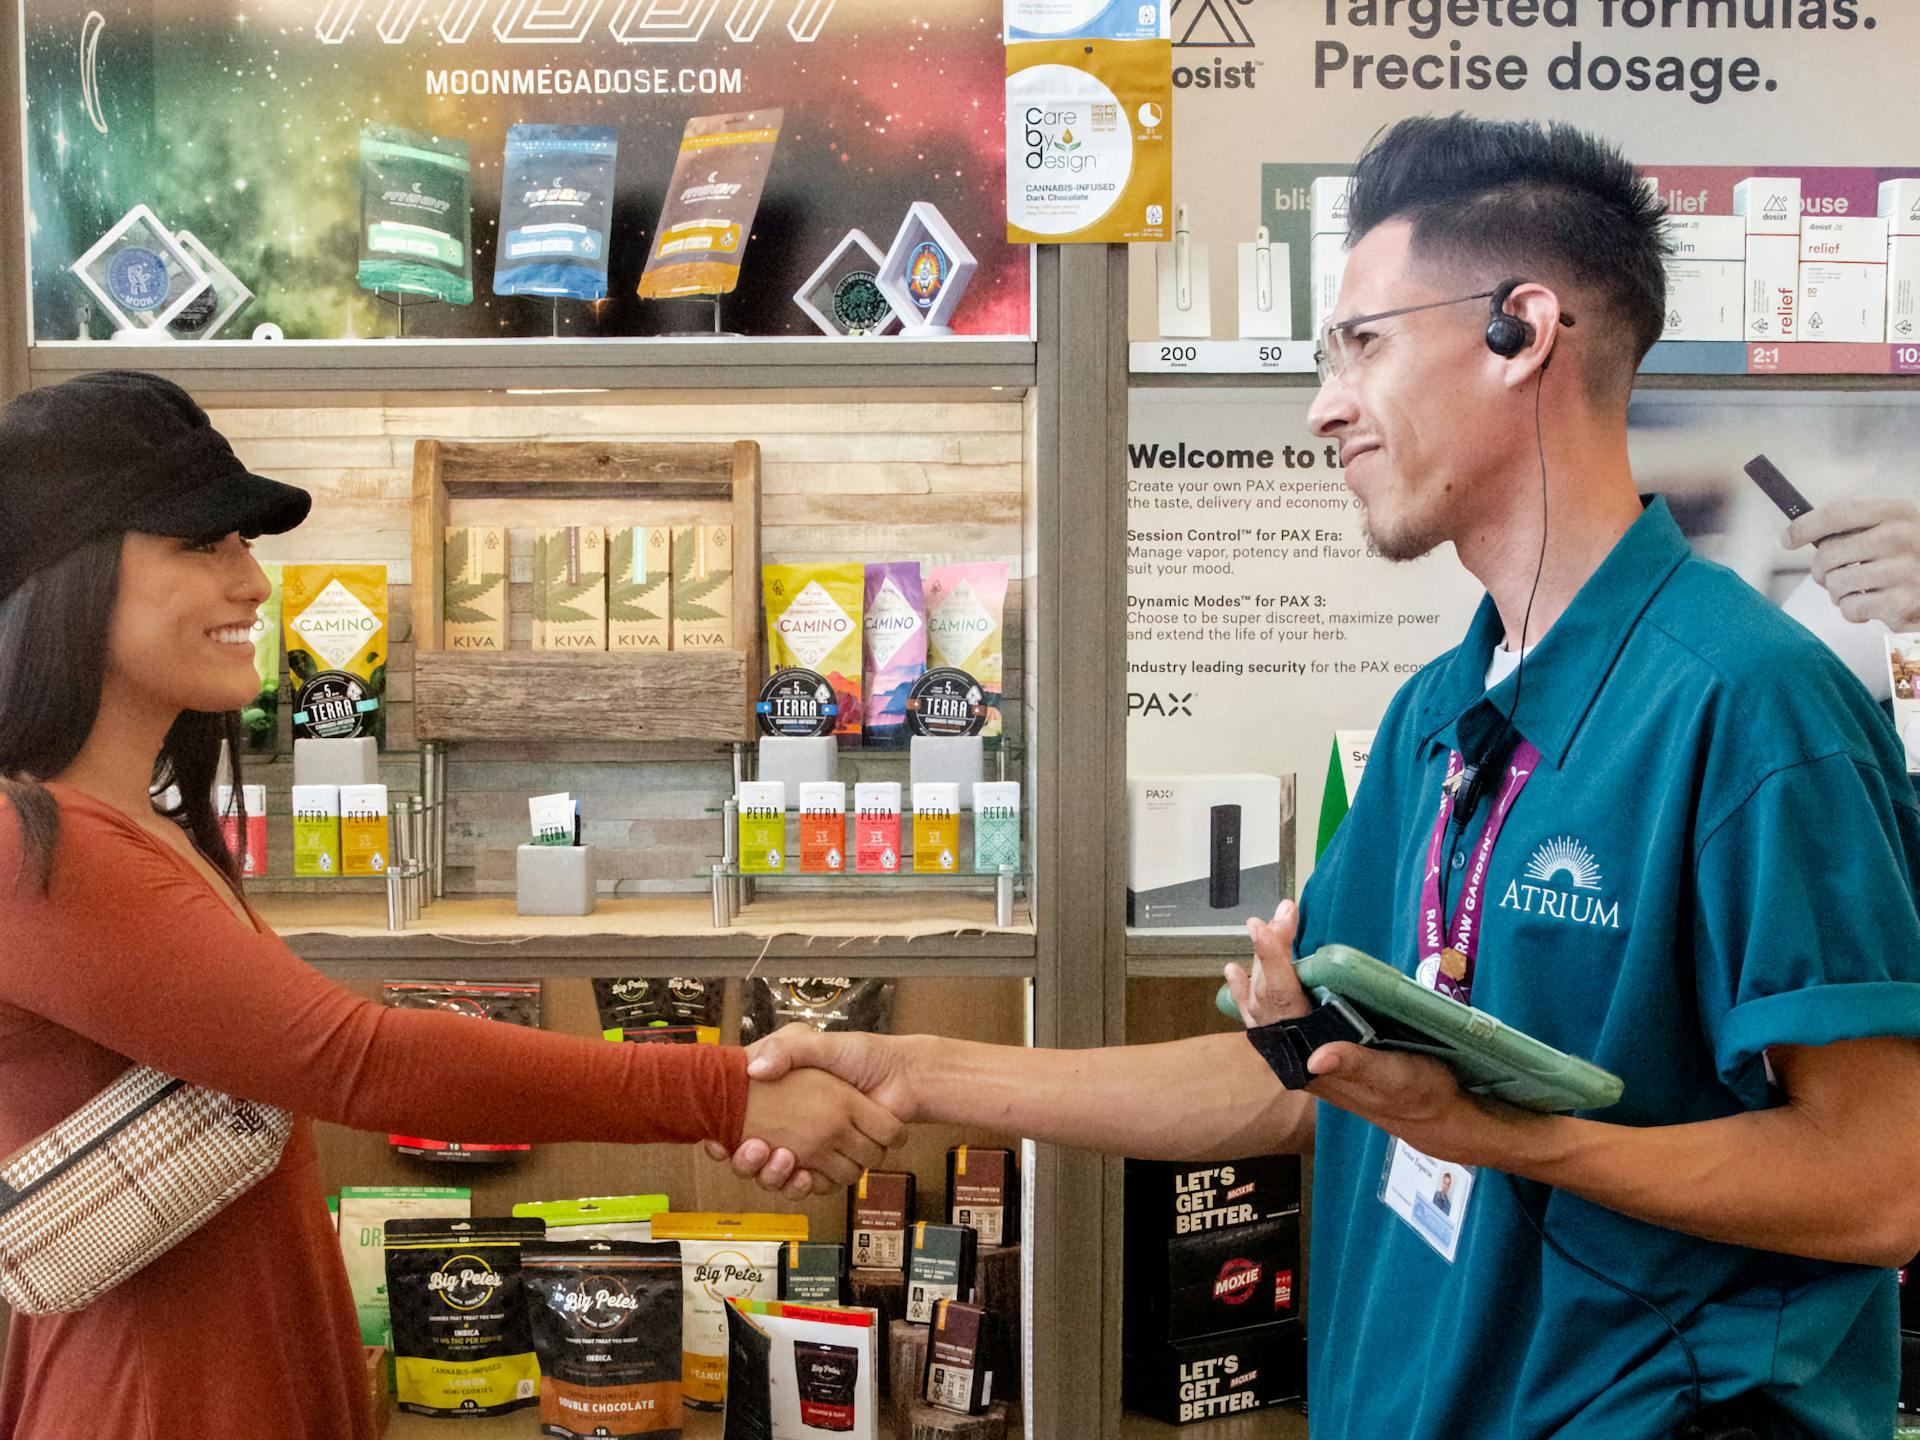 A budtender greets a customer inside the Atrium dispensary in Topanga